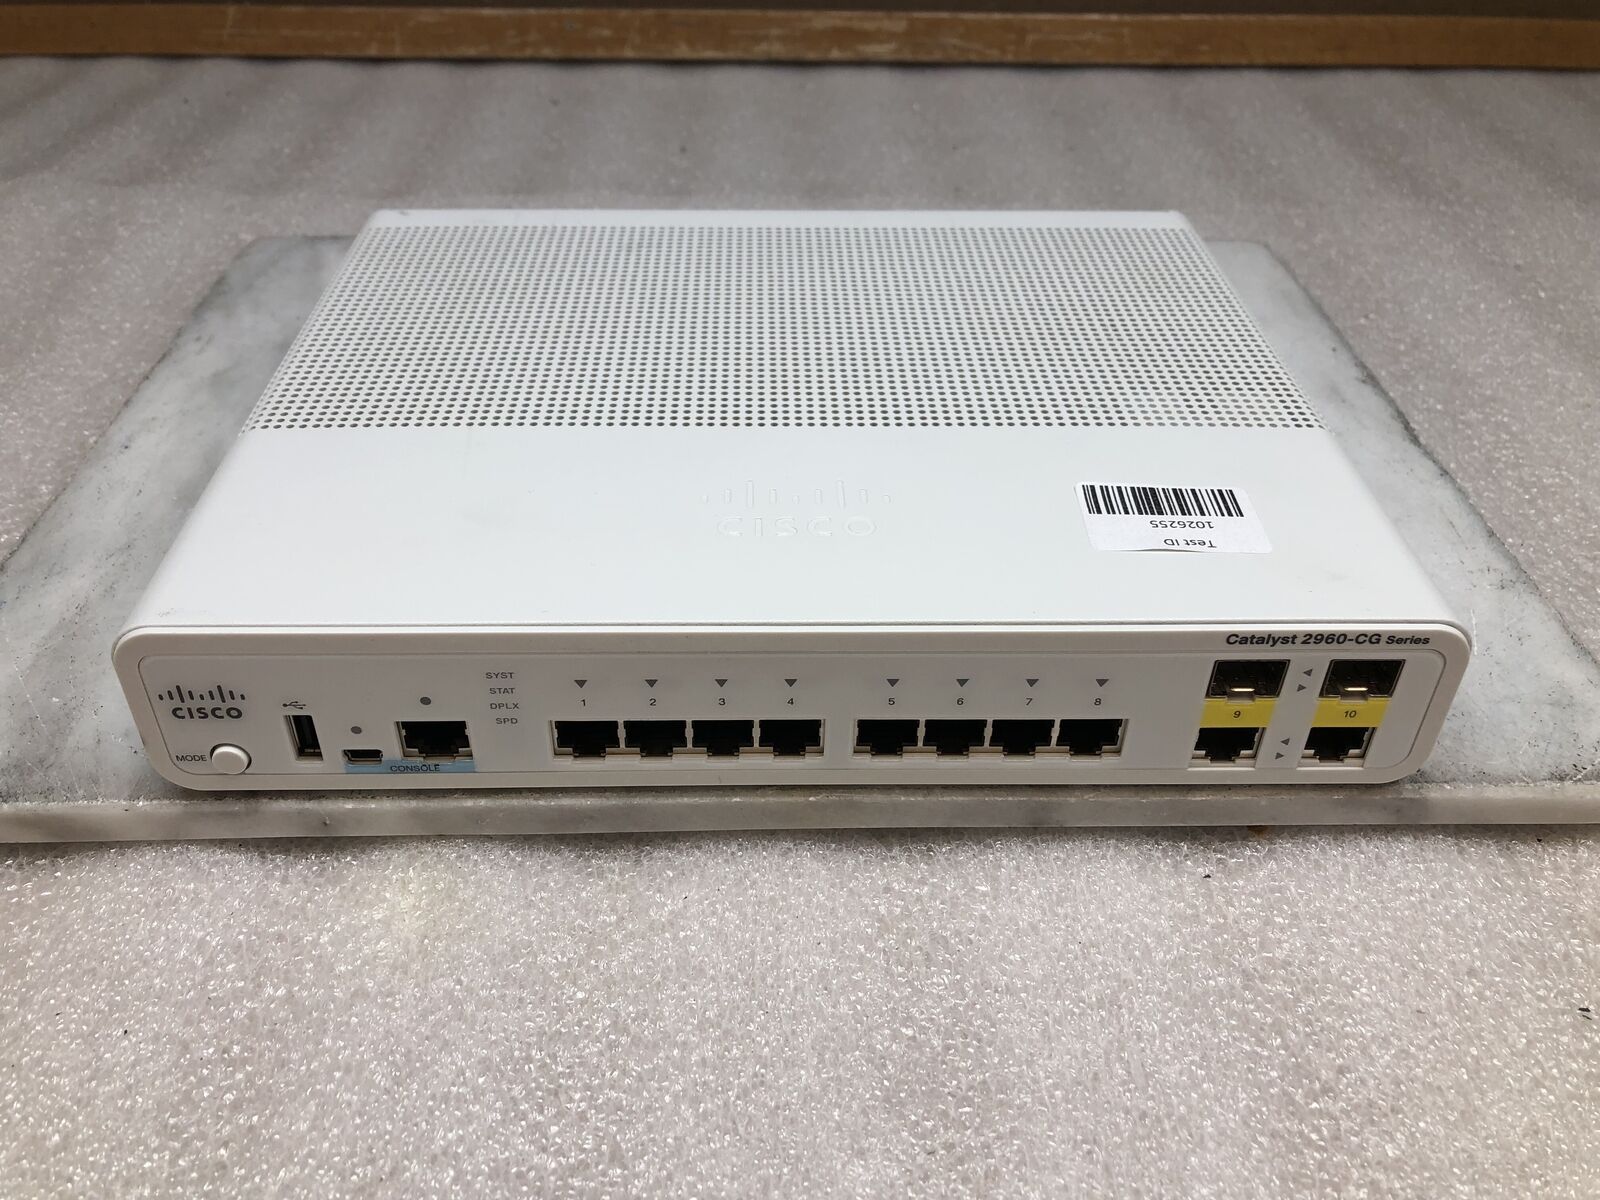 Cisco Catalyst 2960CG Series 8-Port Ethernet Network Switch WS-C2960CG-8TC-L V03